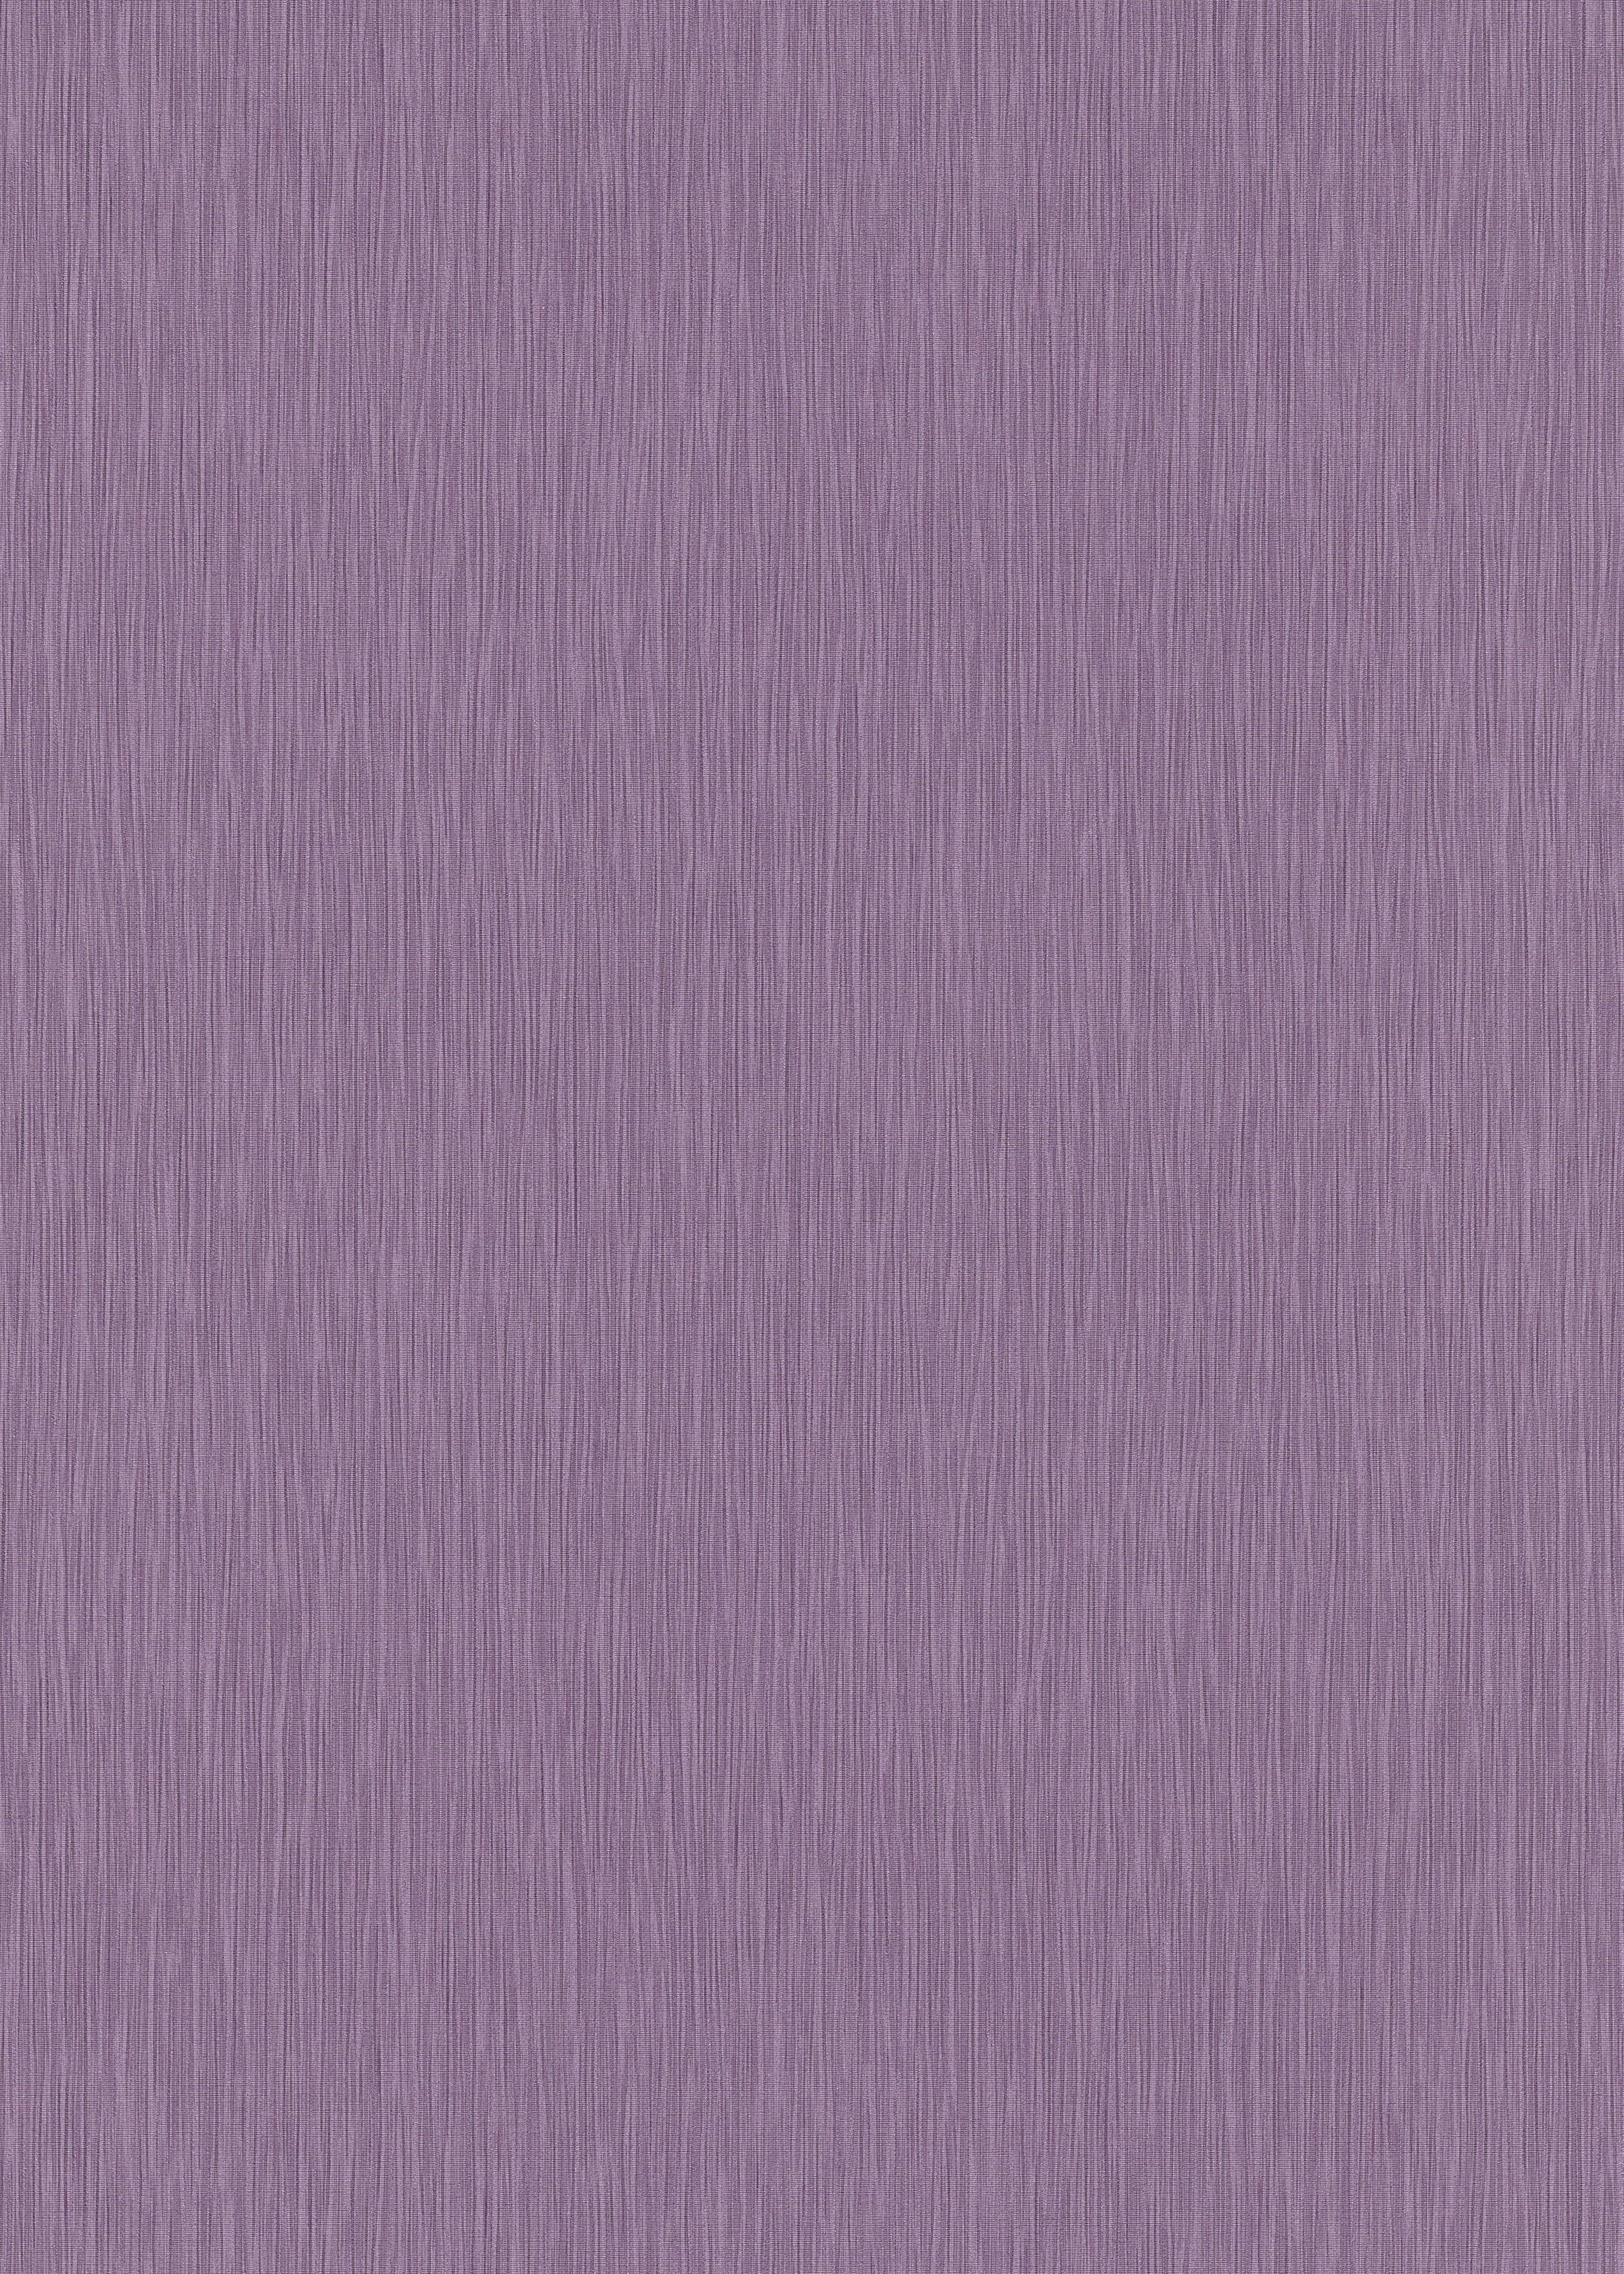 Fashion for walls Vliestapete Fusion, Phthalate KRETSCHMER violett GUIDO geprägt, frei, MARIA Strukturmuster, glänzend